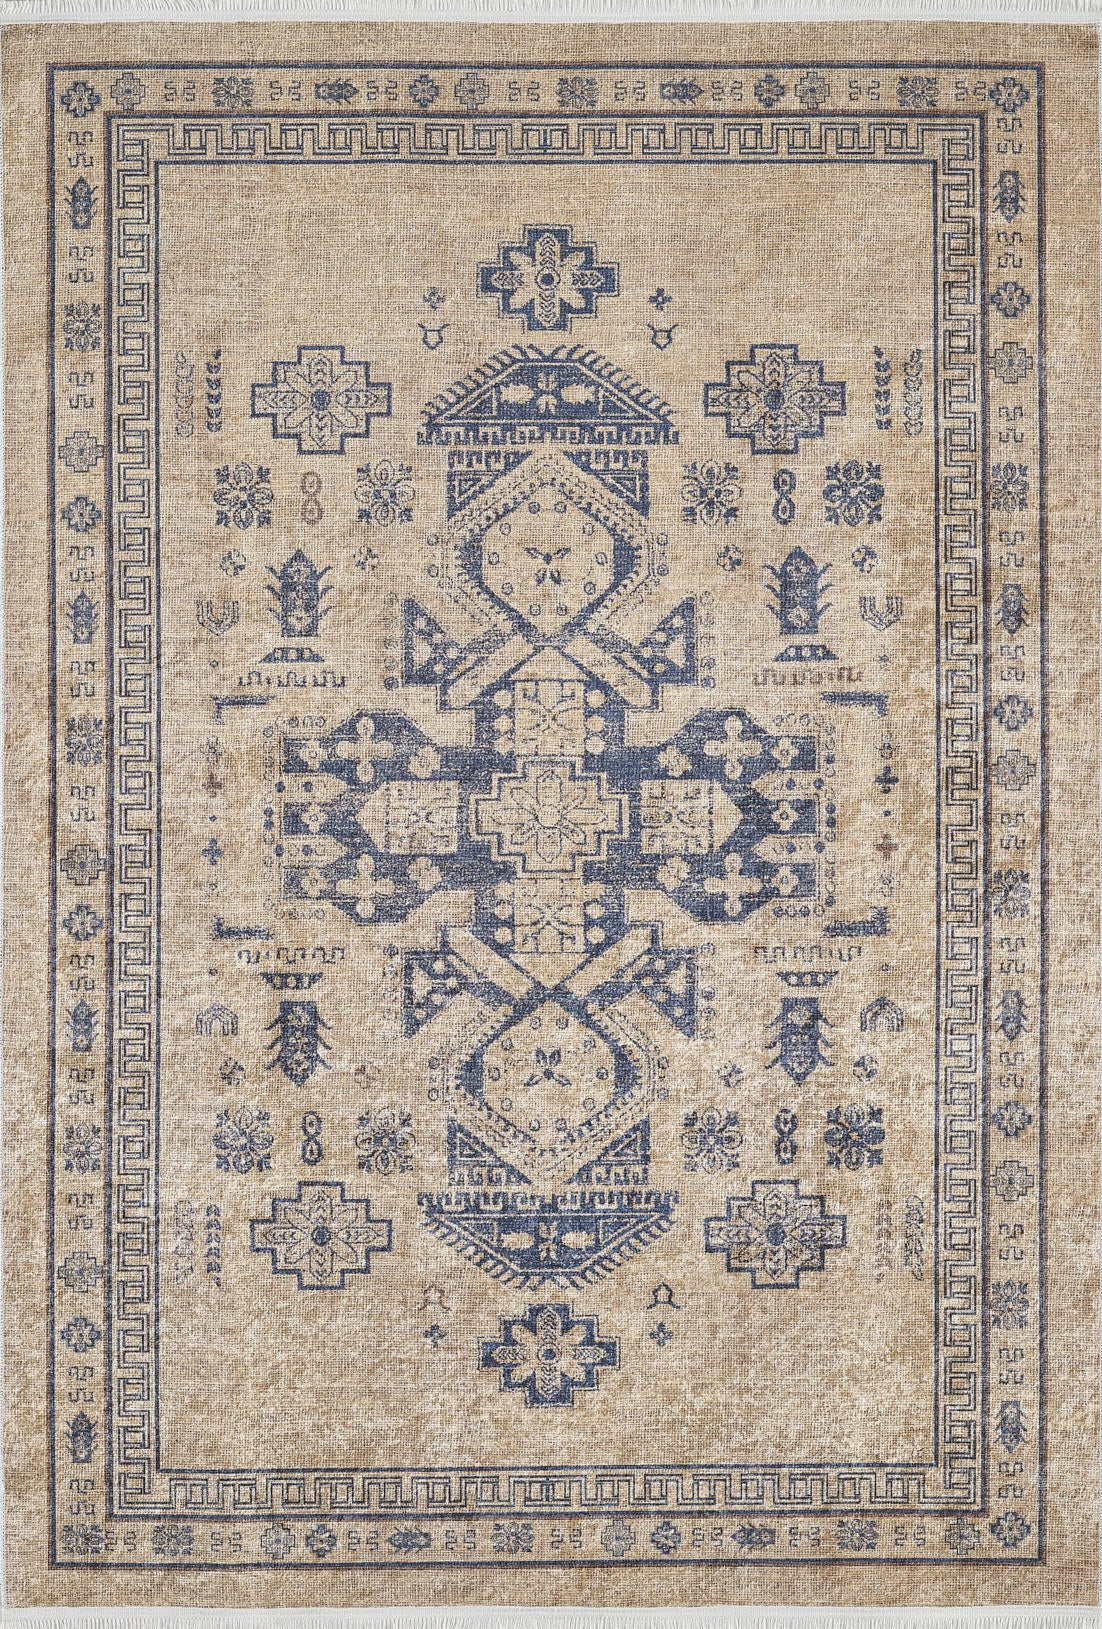 machine-washable-area-rug-Medallion-Tribal-Ethnic-Collection-Cream-Beige-JR1896